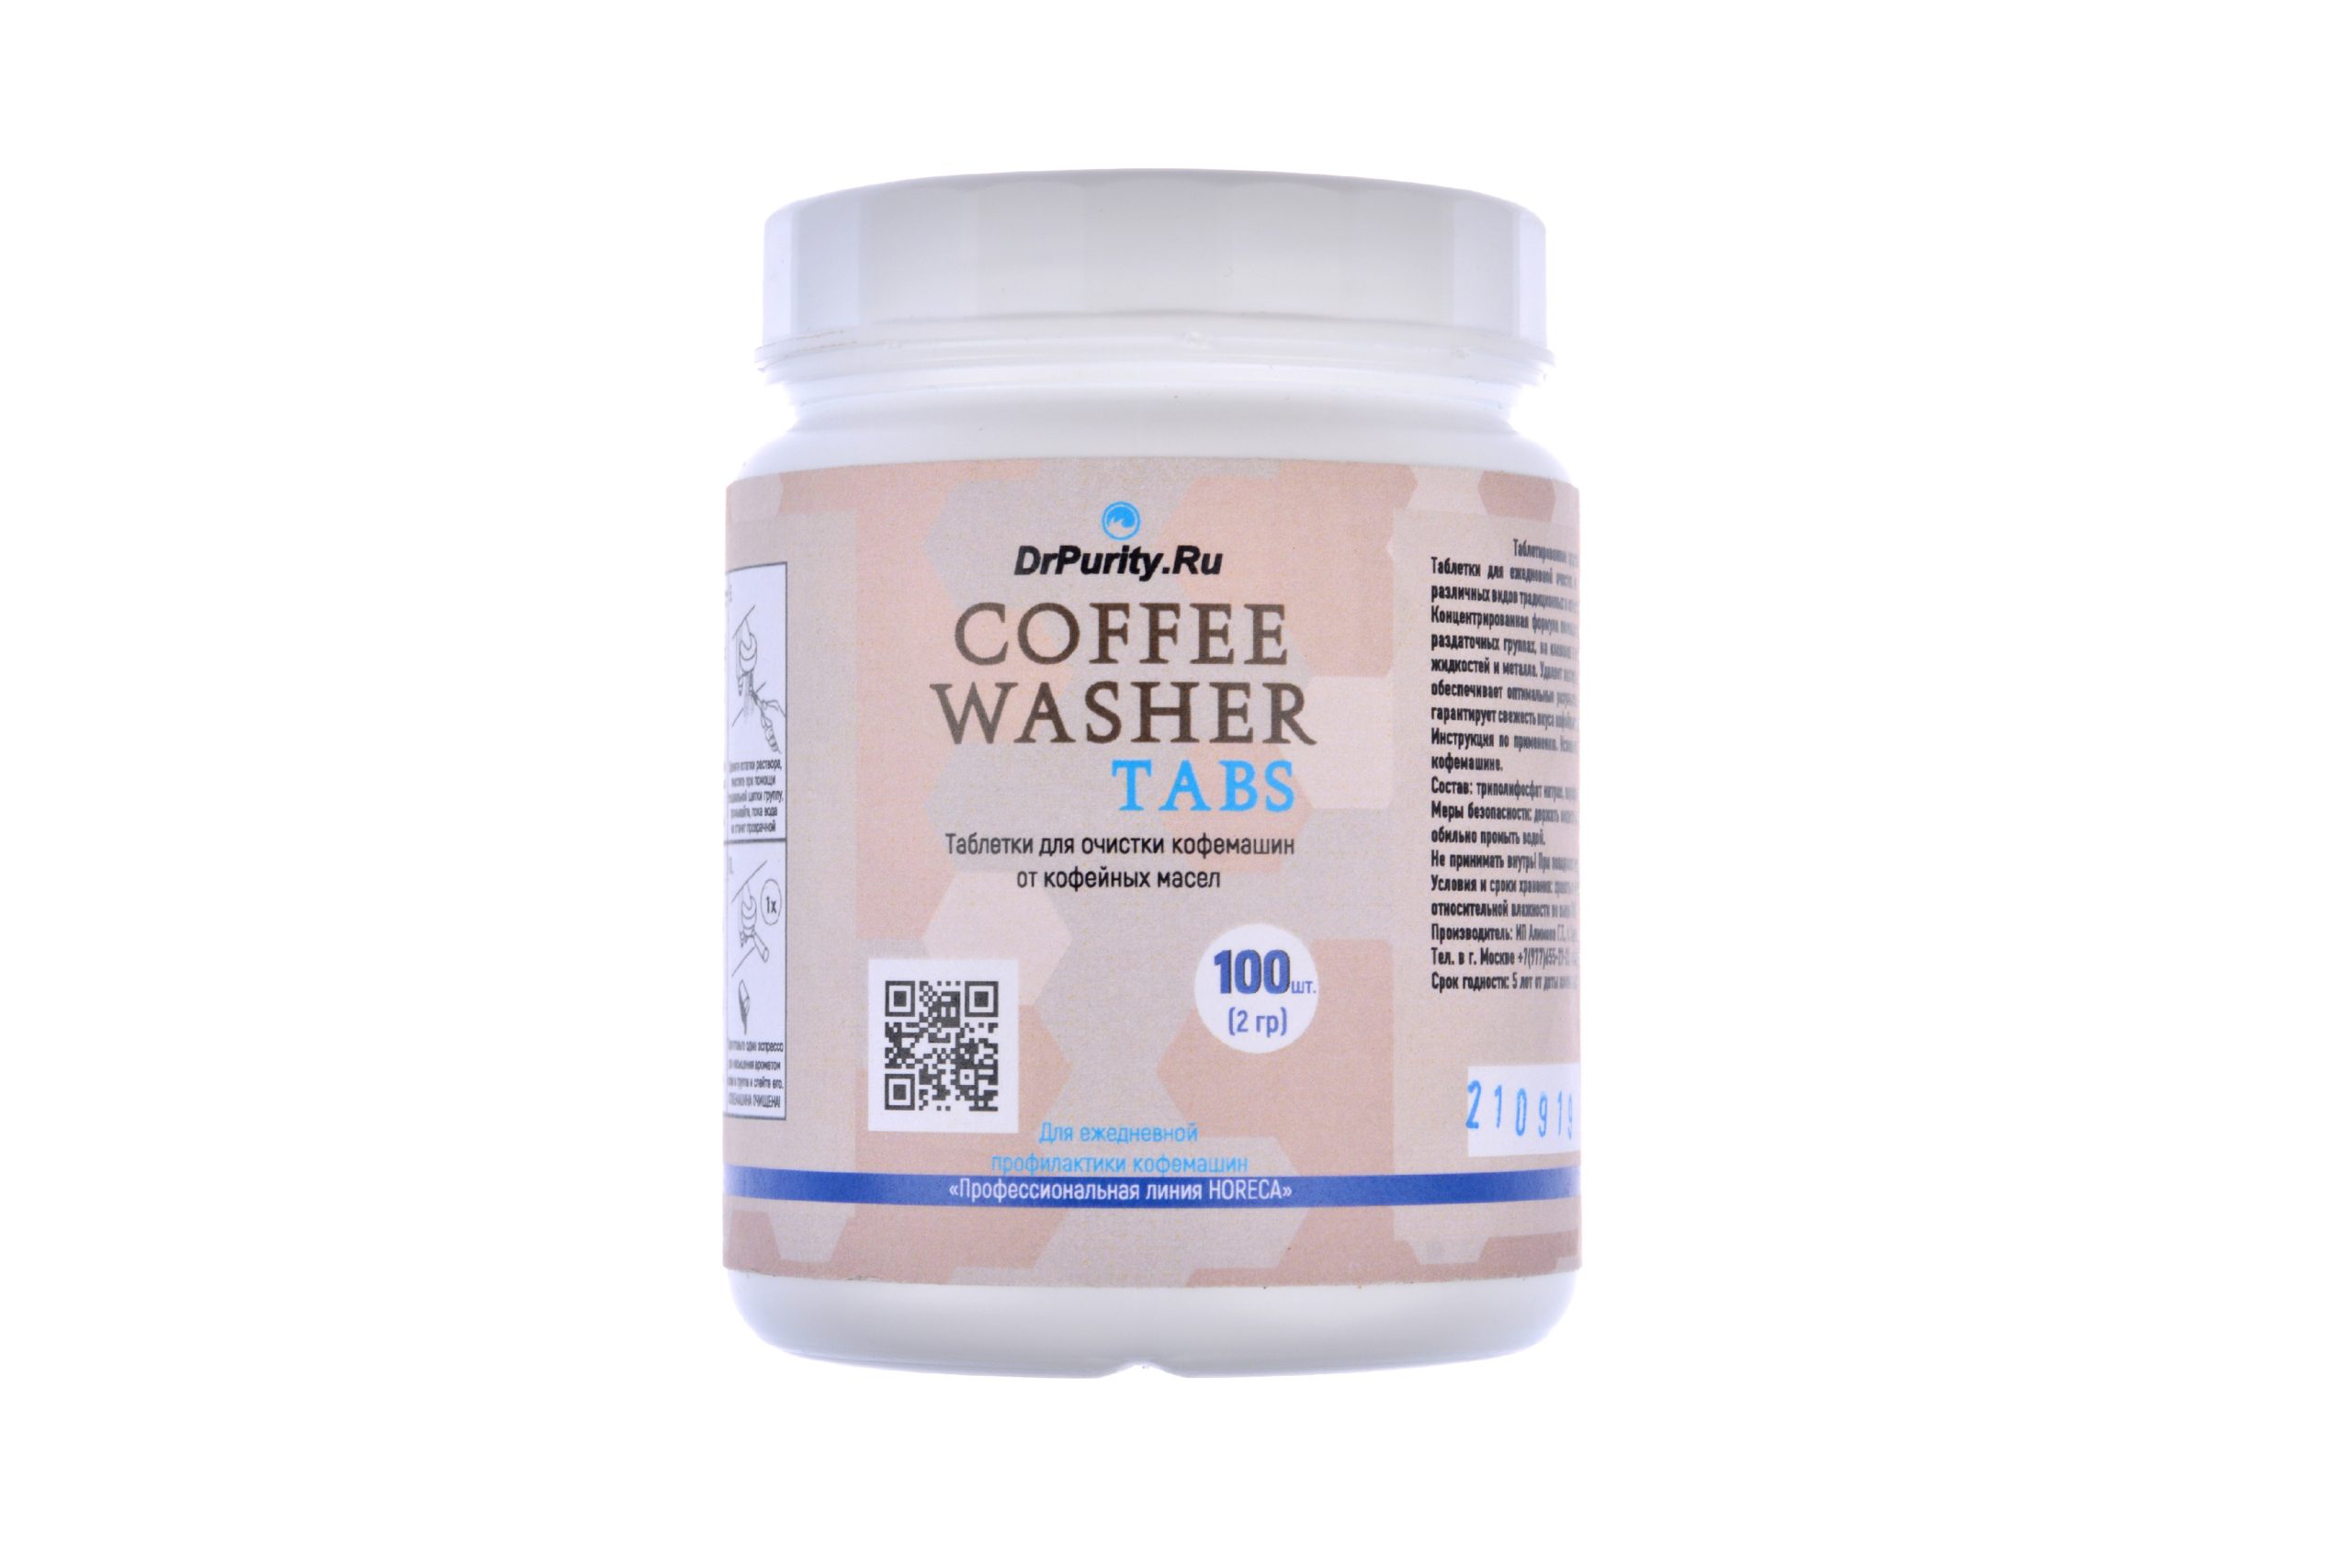 Coffee washer tabs tiemco soft shell cicada